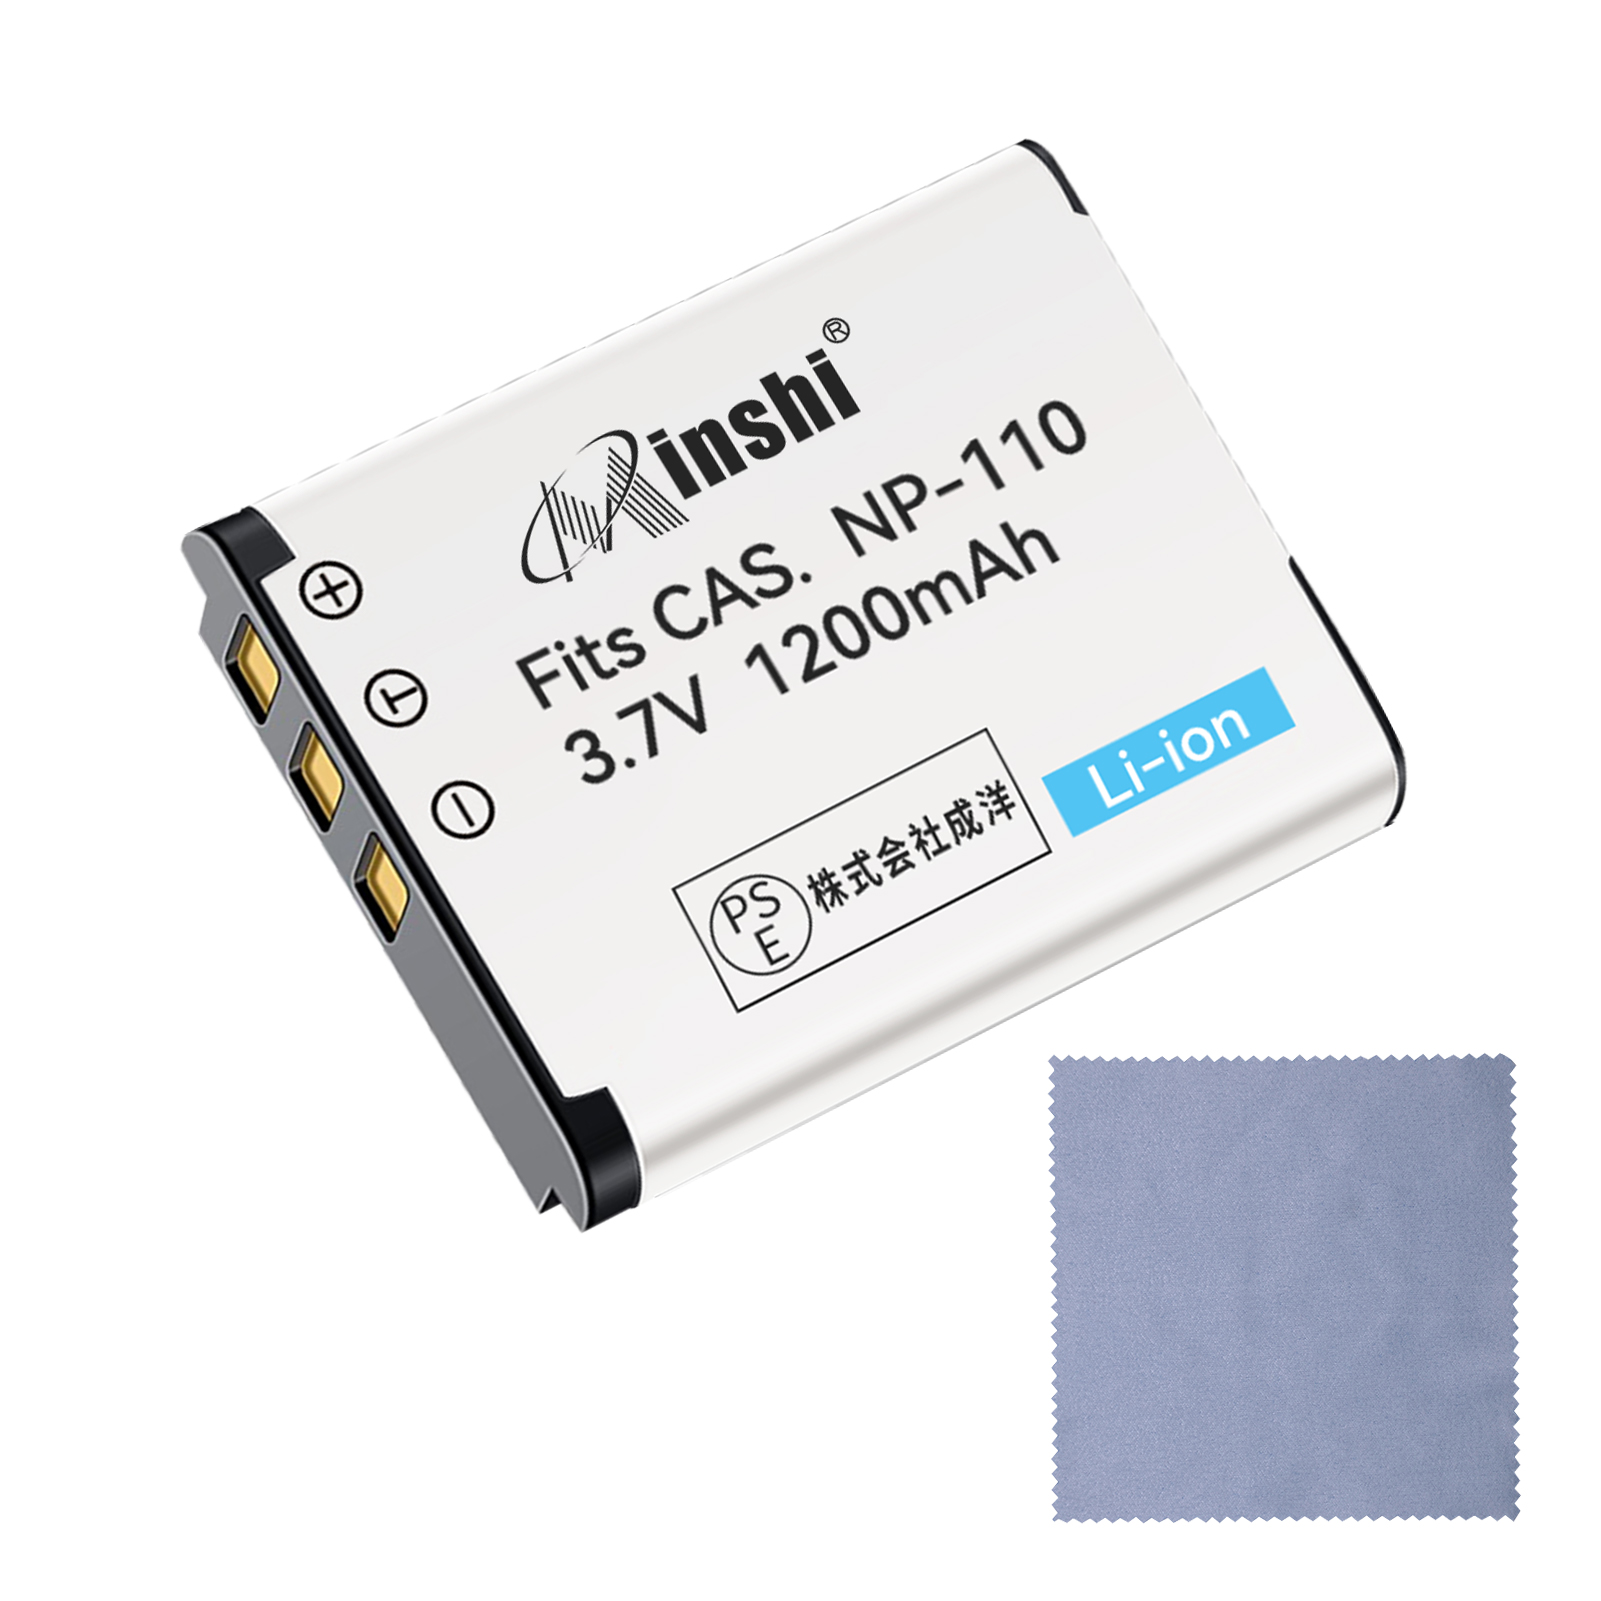 【清潔布ー付】minshi CASIO BN-VG212 NP-110 【1200mAh 3.7V】PSE認定済 高品質BN-VG212U NP-160交換用バッテリー